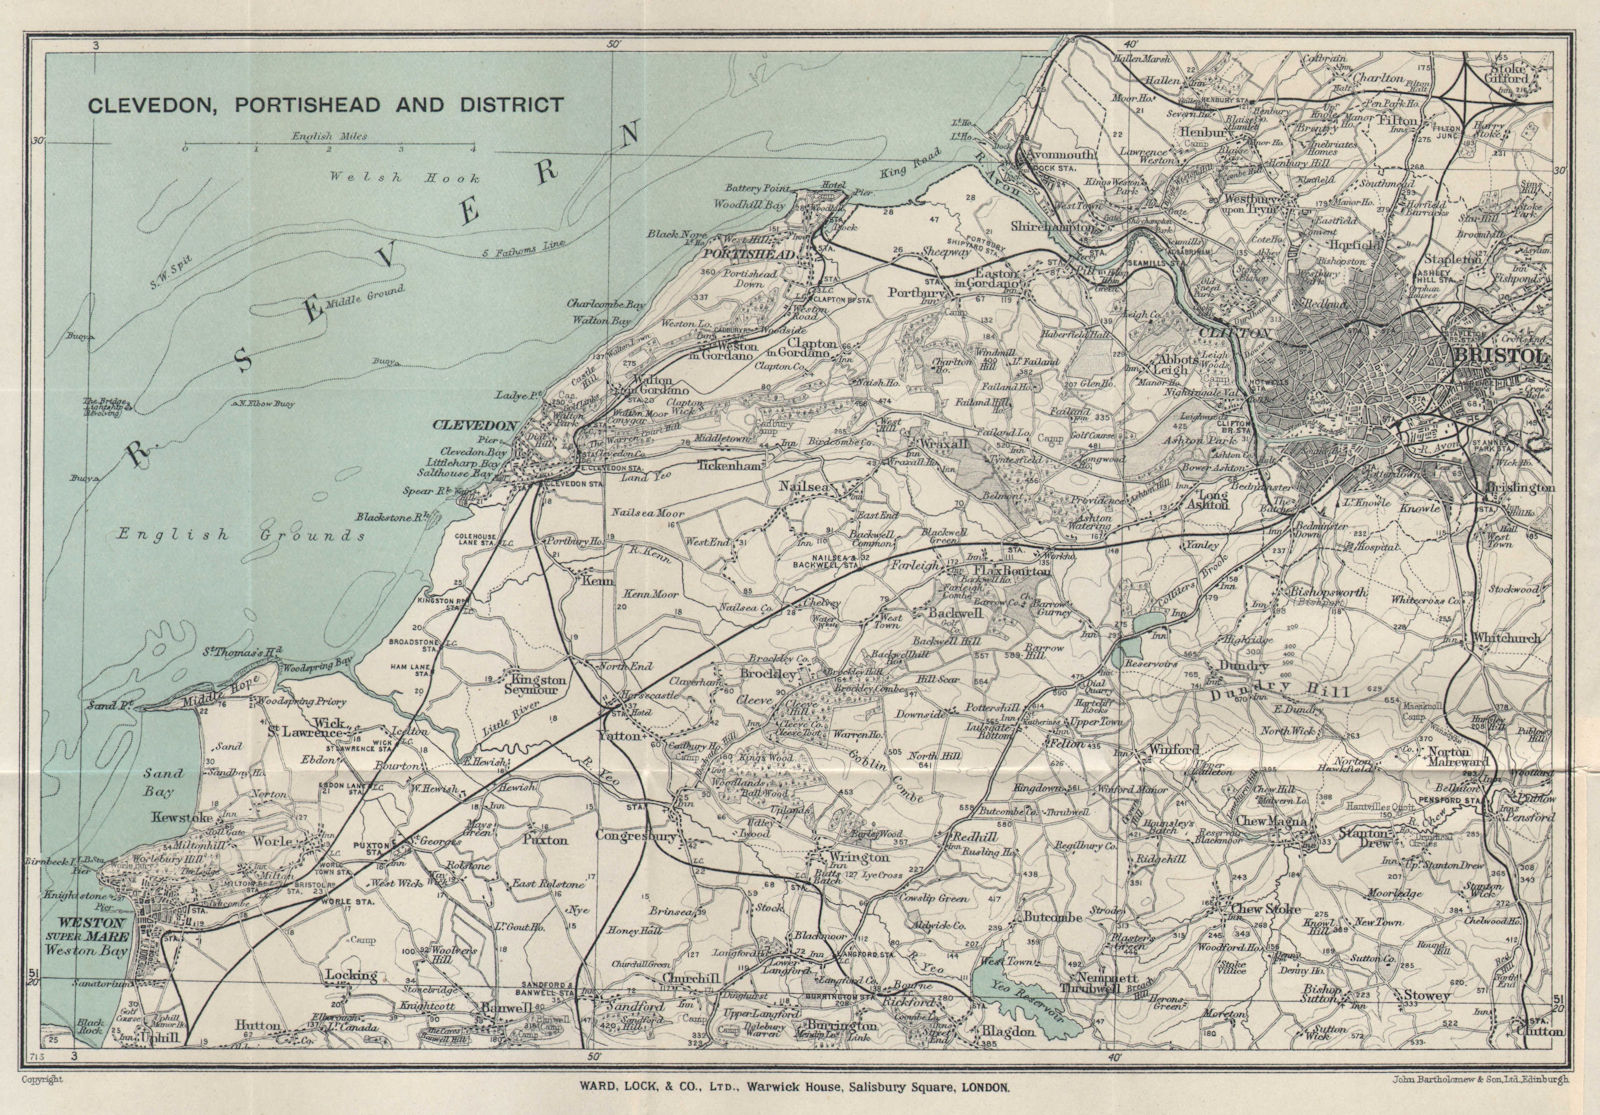 SOMERSET COAST Clevedon Portishead Weston-super-Mare Bristol WARD LOCK 1928 map